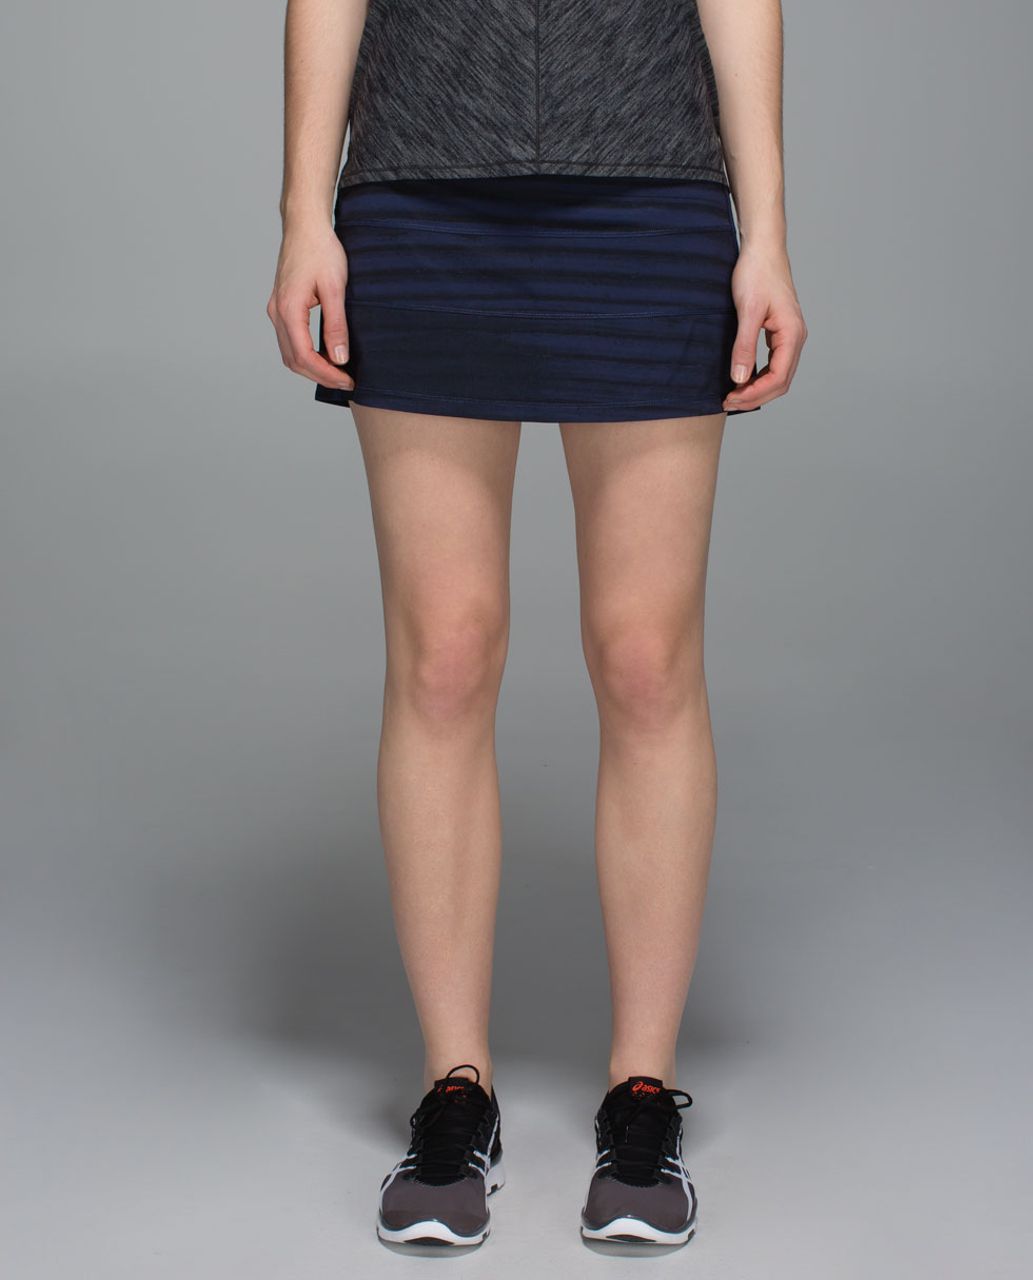 Lululemon Pace Rival Skirt II *4-way Stretch (Regular) - Good Vibes Deep Navy Black / Deep Navy